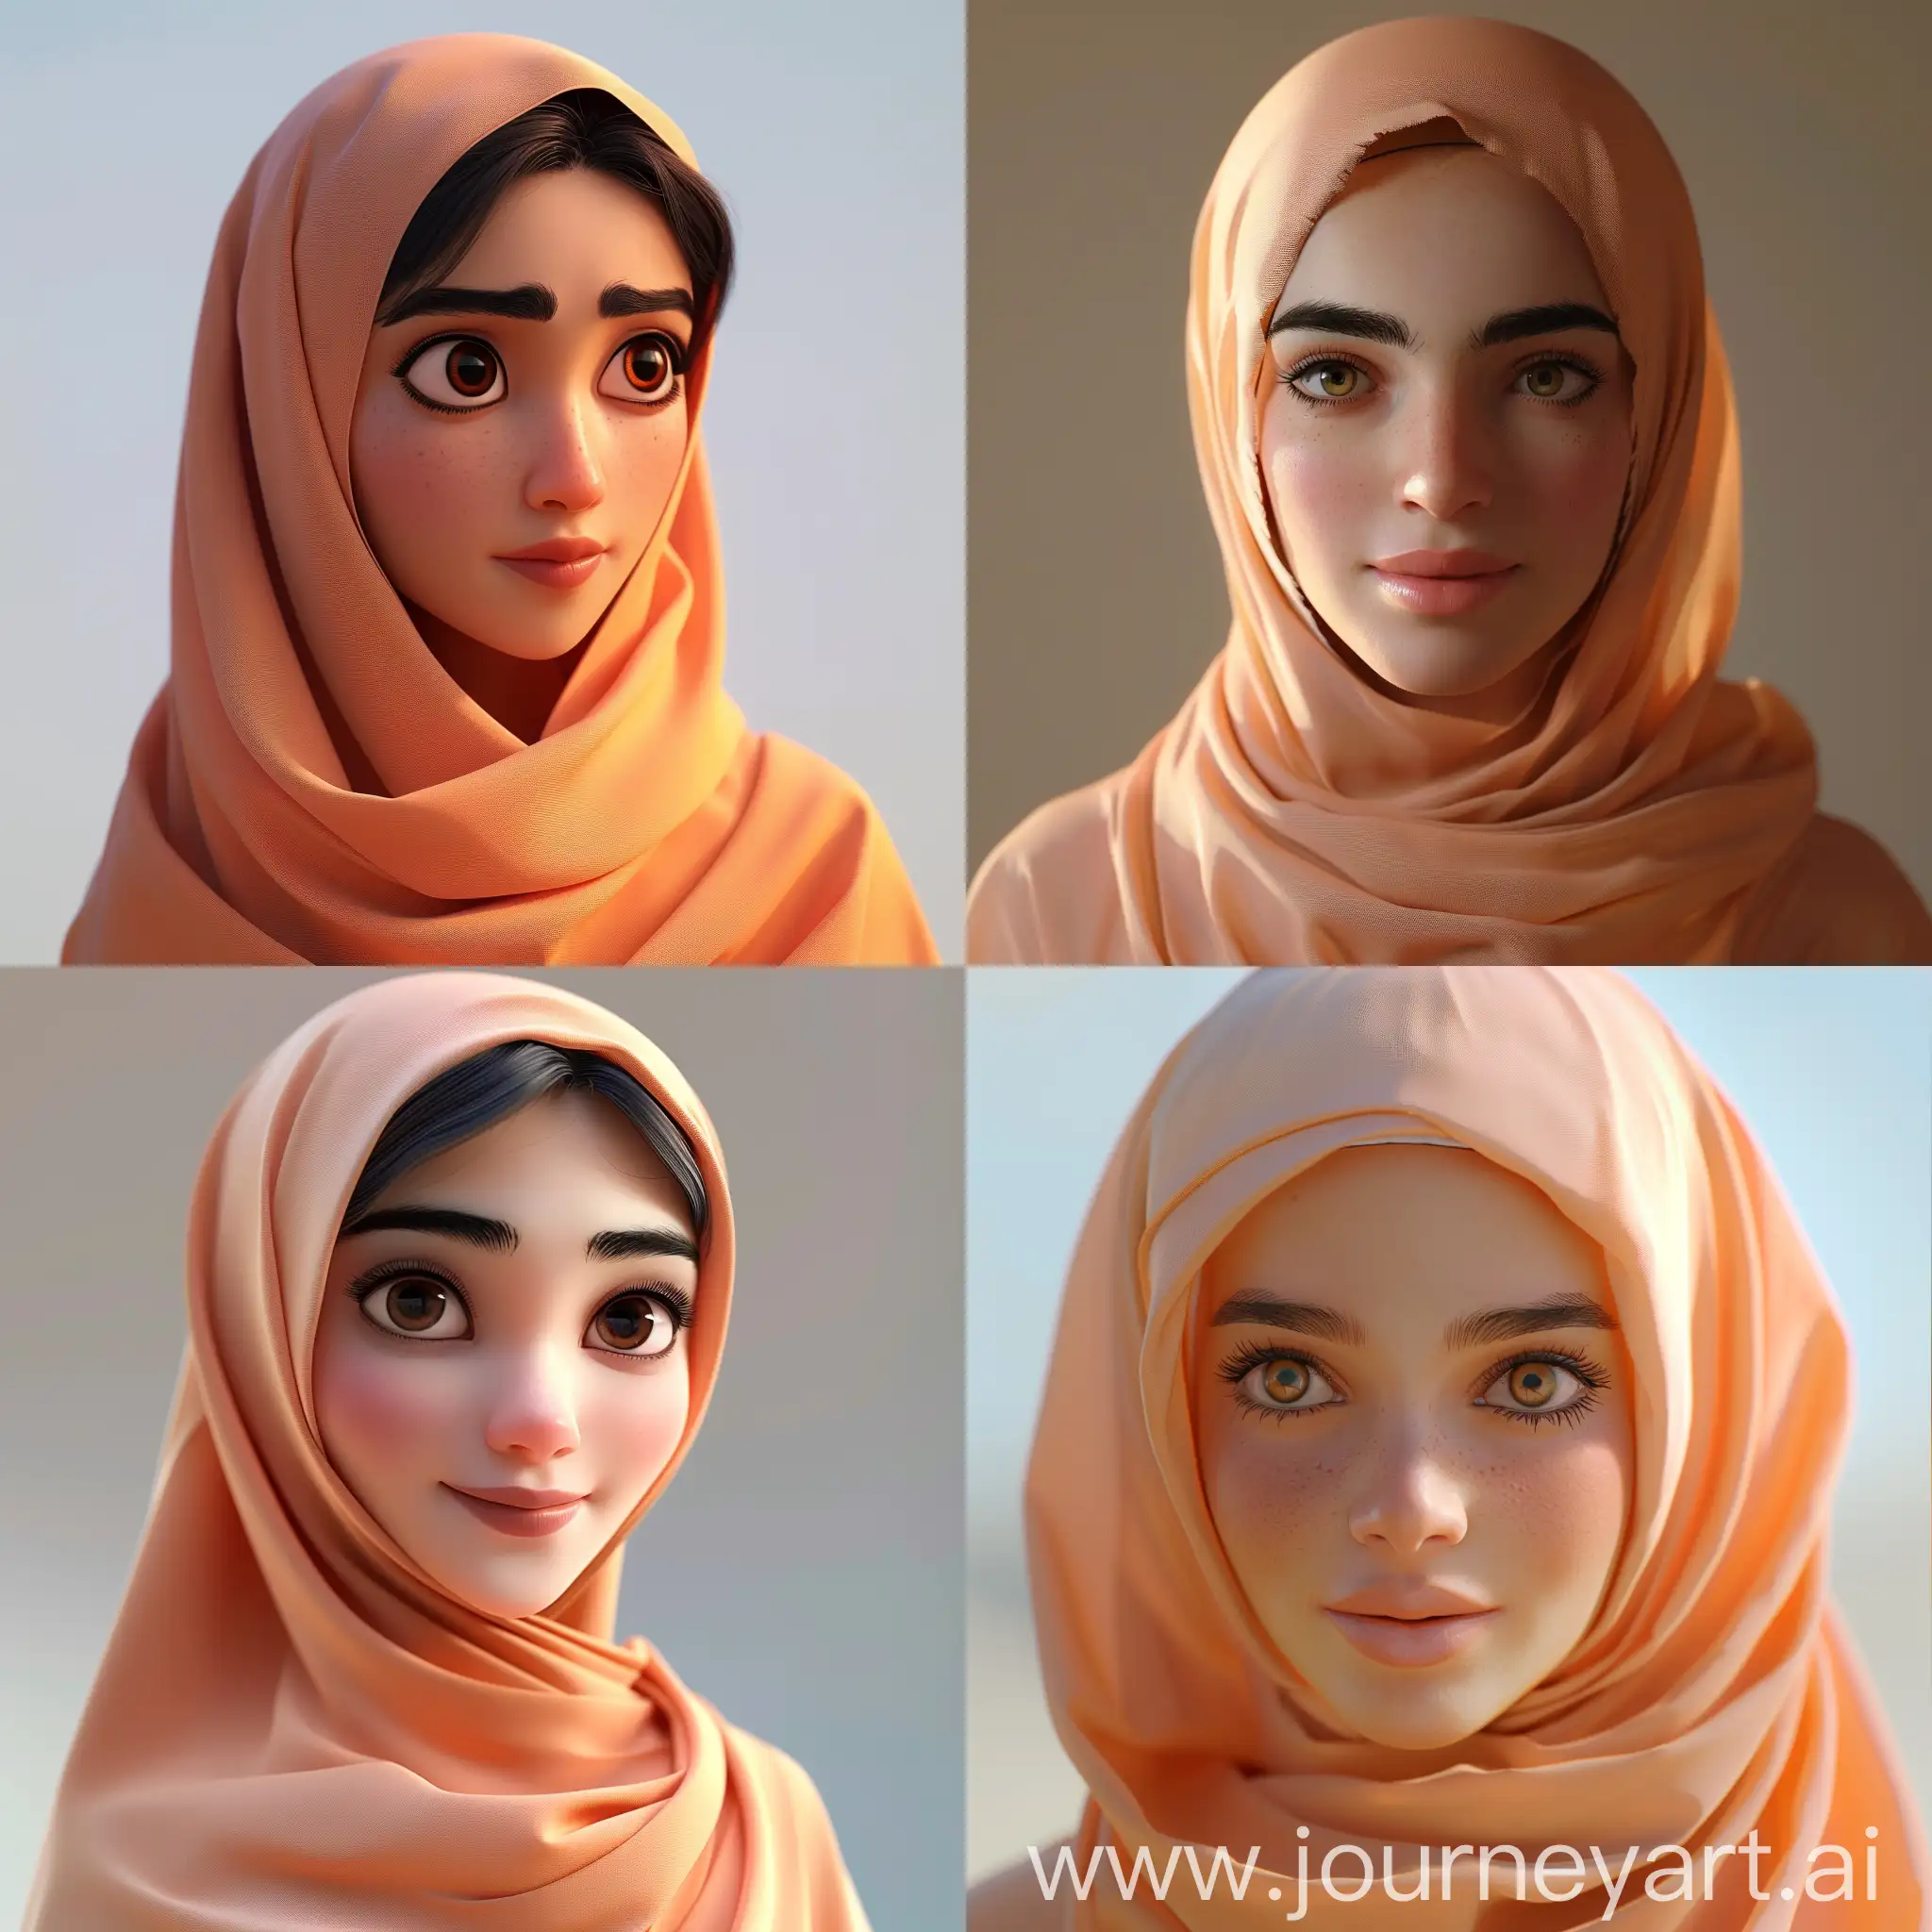 Disney-Pixar-Style-Portrait-Woman-Wearing-Peach-Hijab-in-Natural-Lighting